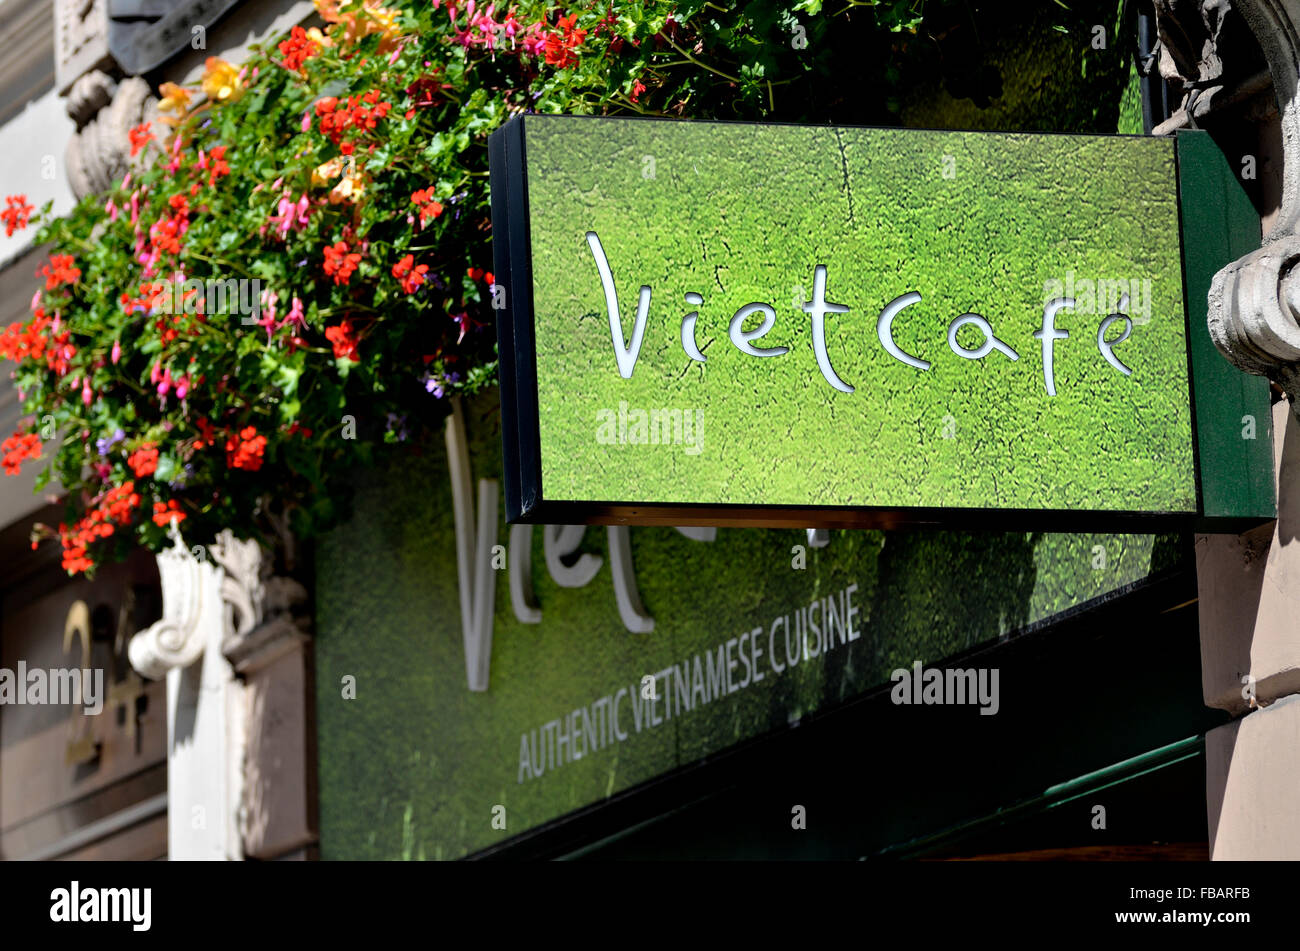 London, England, UK. Vietcafe in Haymarket. 'Authentic Vietnamese Cuisine' Stock Photo